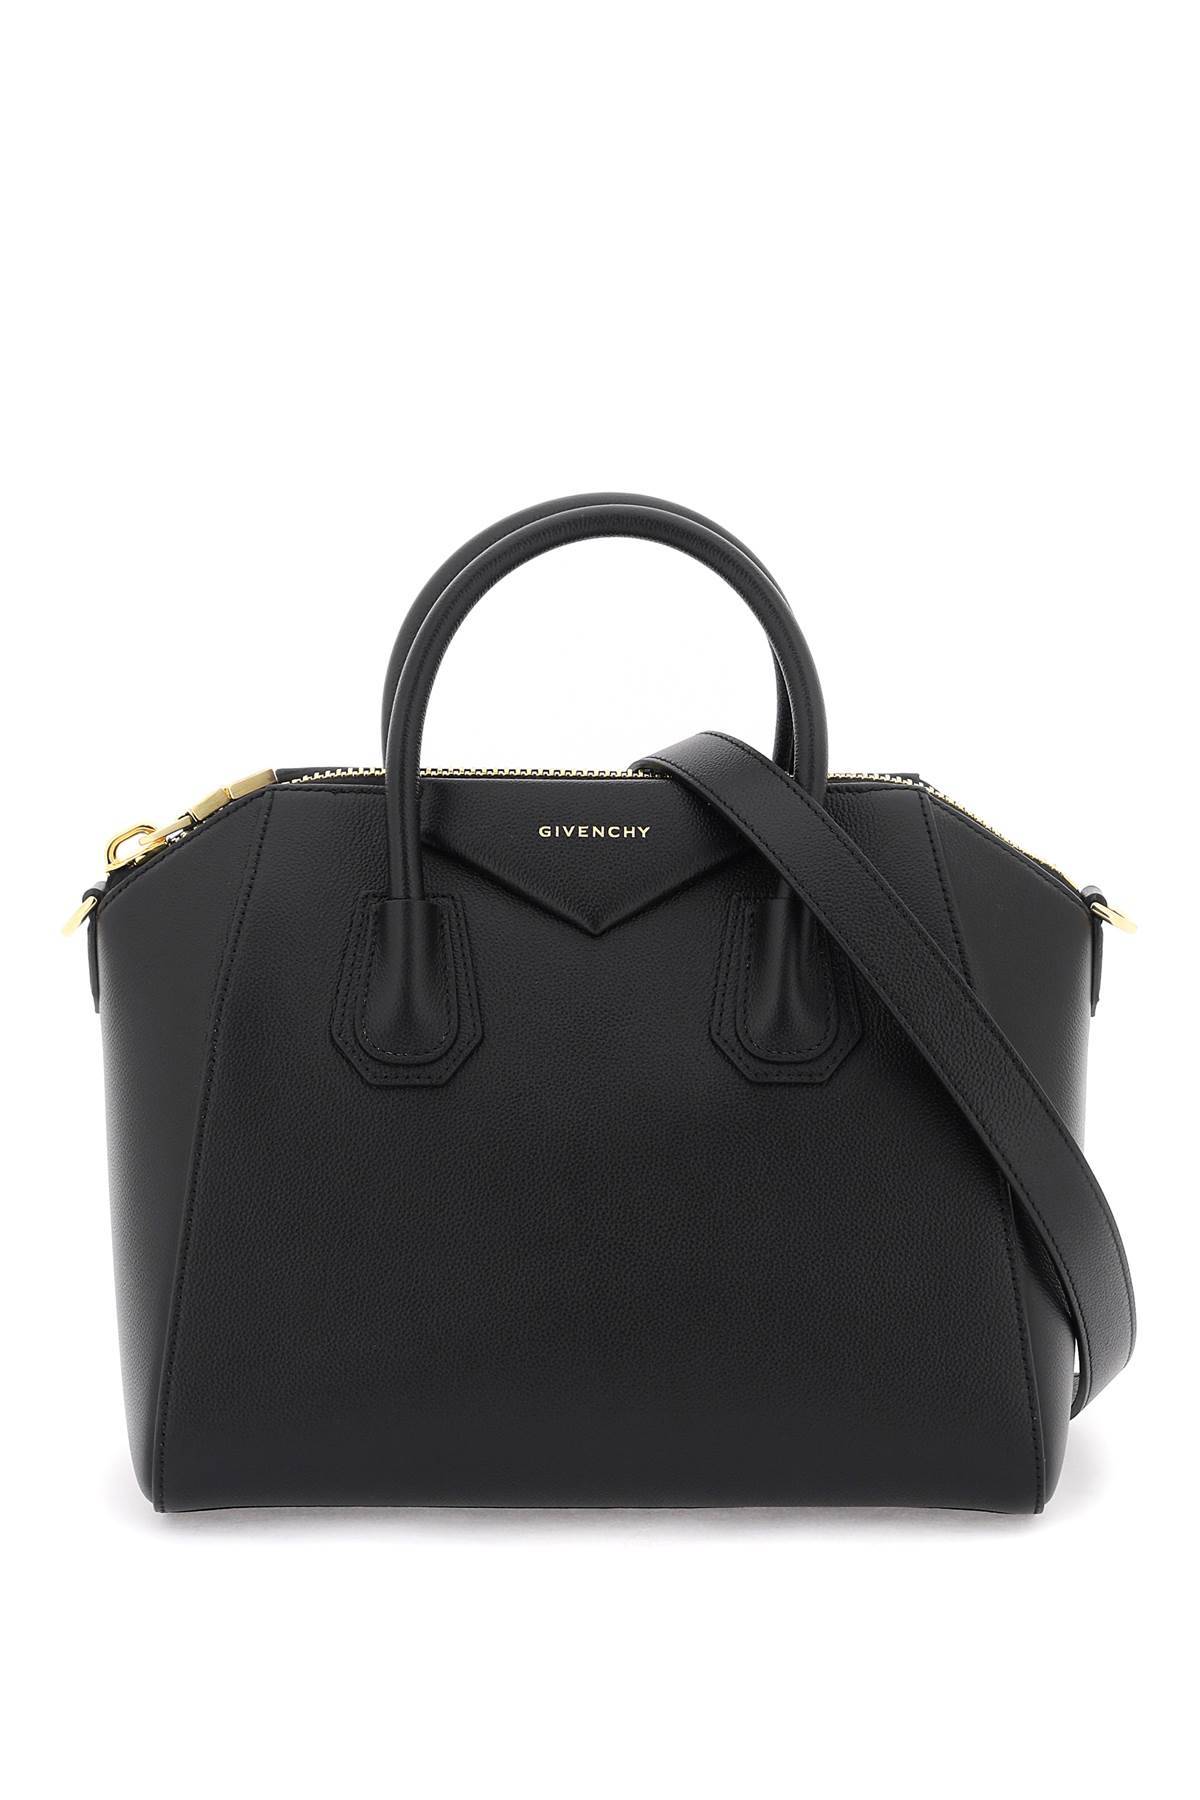 Givenchy Small 'antigona' Handbag In Black